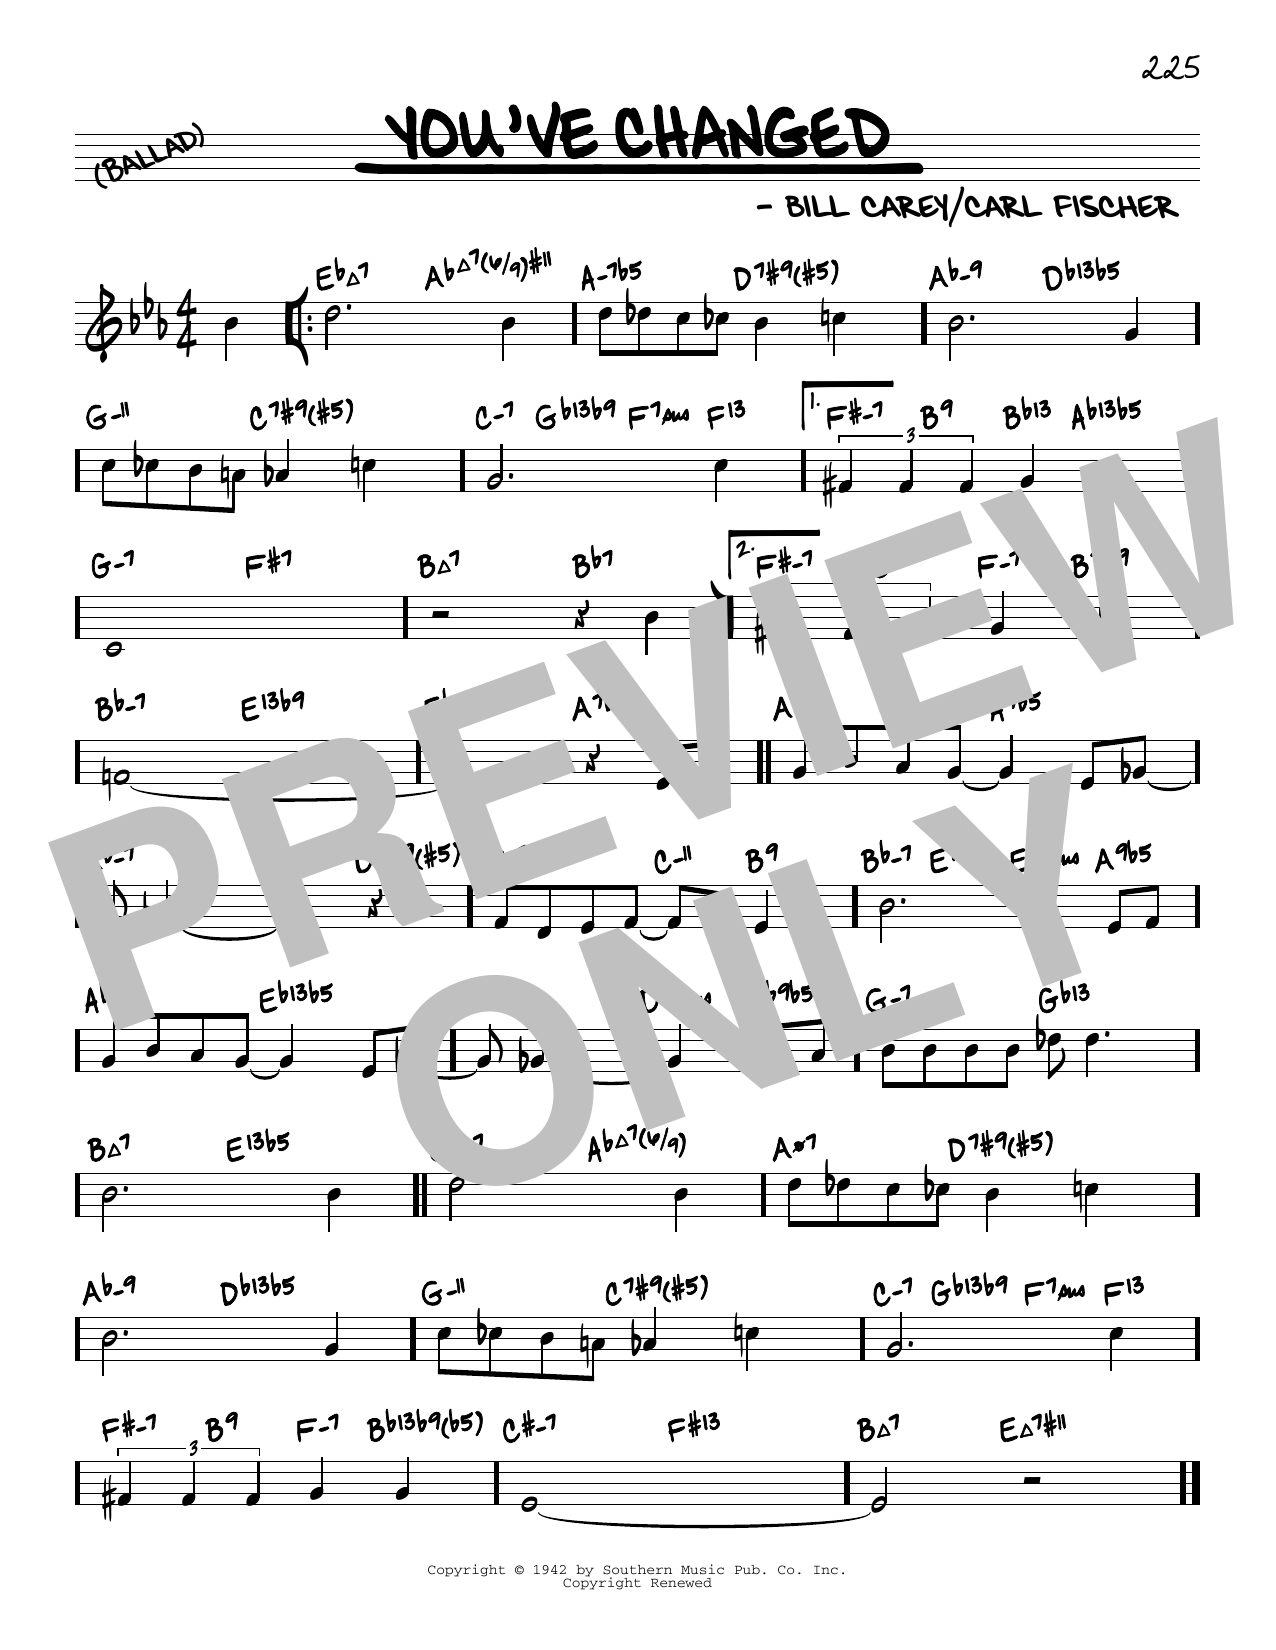 Carl Fischer You've Changed (arr. David Hazeltine) Sheet Music Notes & Chords for Real Book – Enhanced Chords - Download or Print PDF